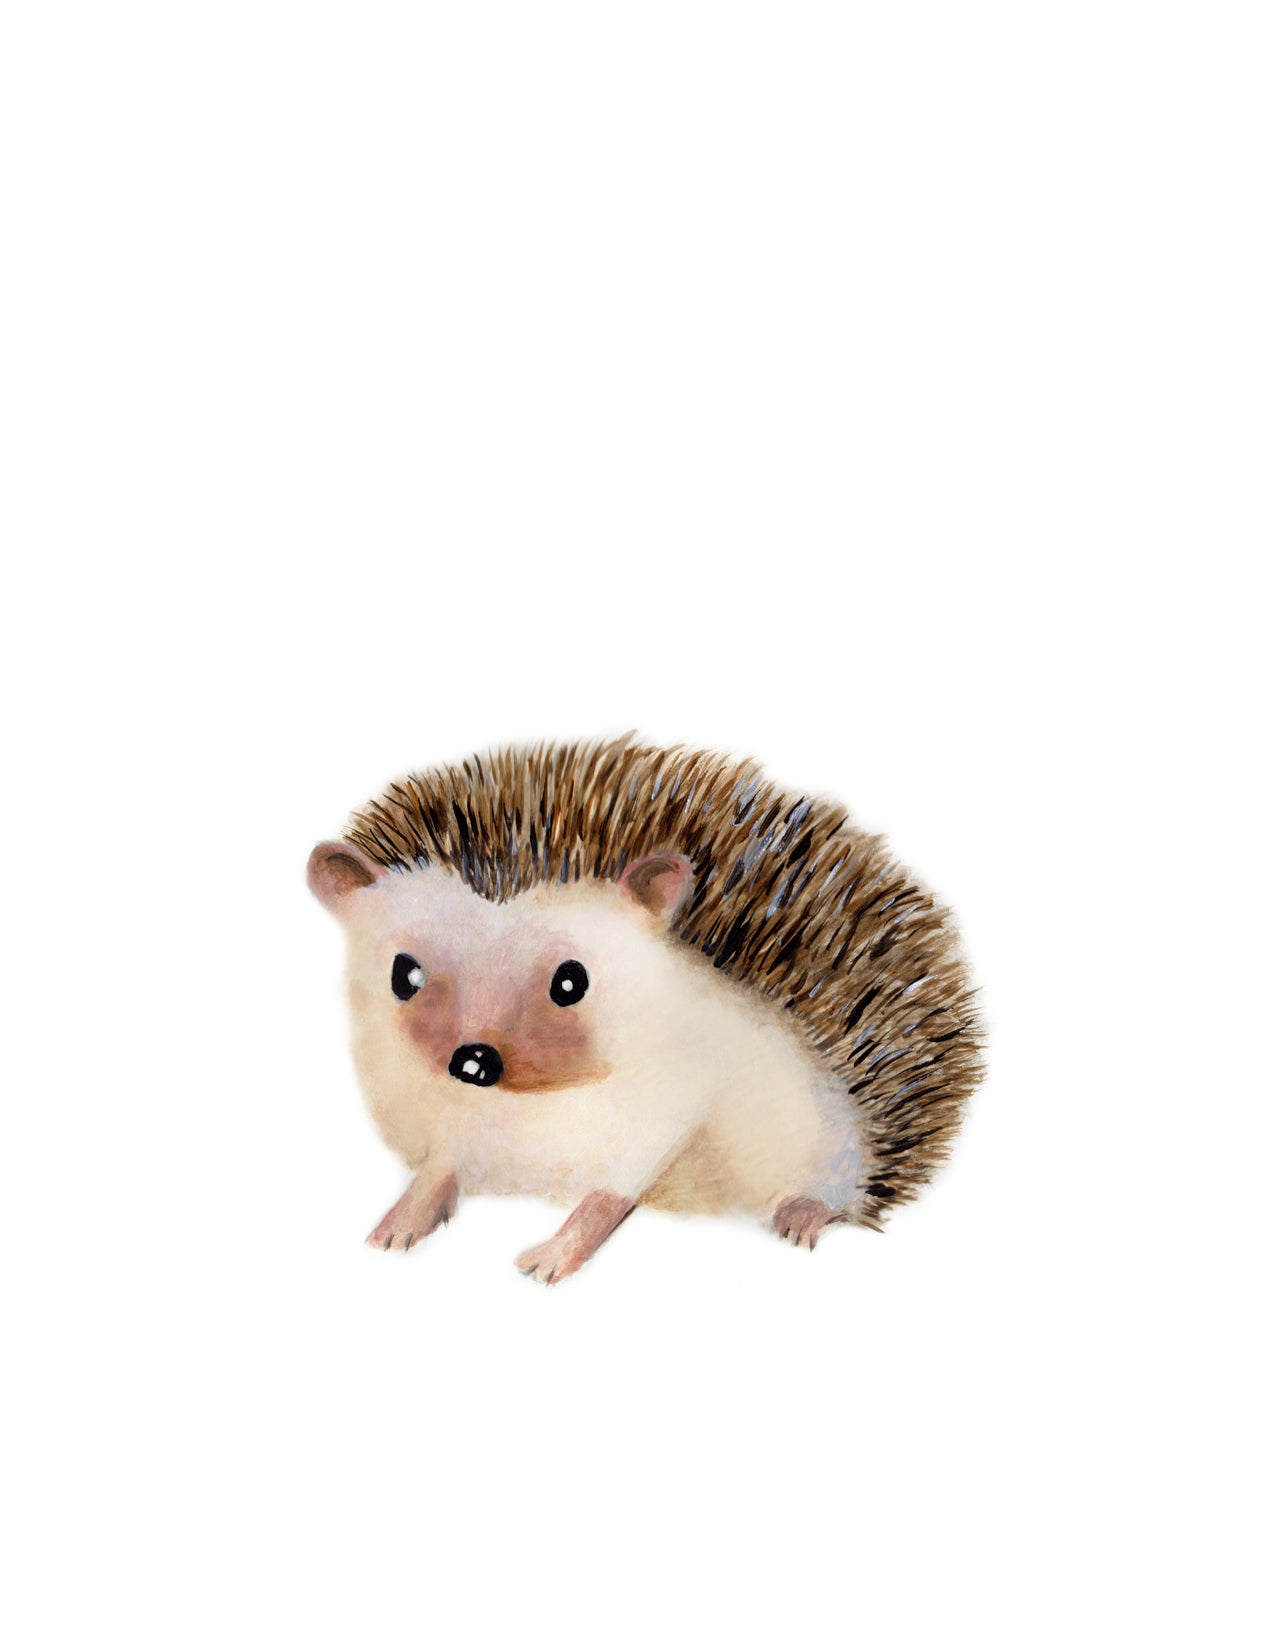 Hedgehog Nursery Art Print - Studio Q - Art by Nicky Quartermaine Scott